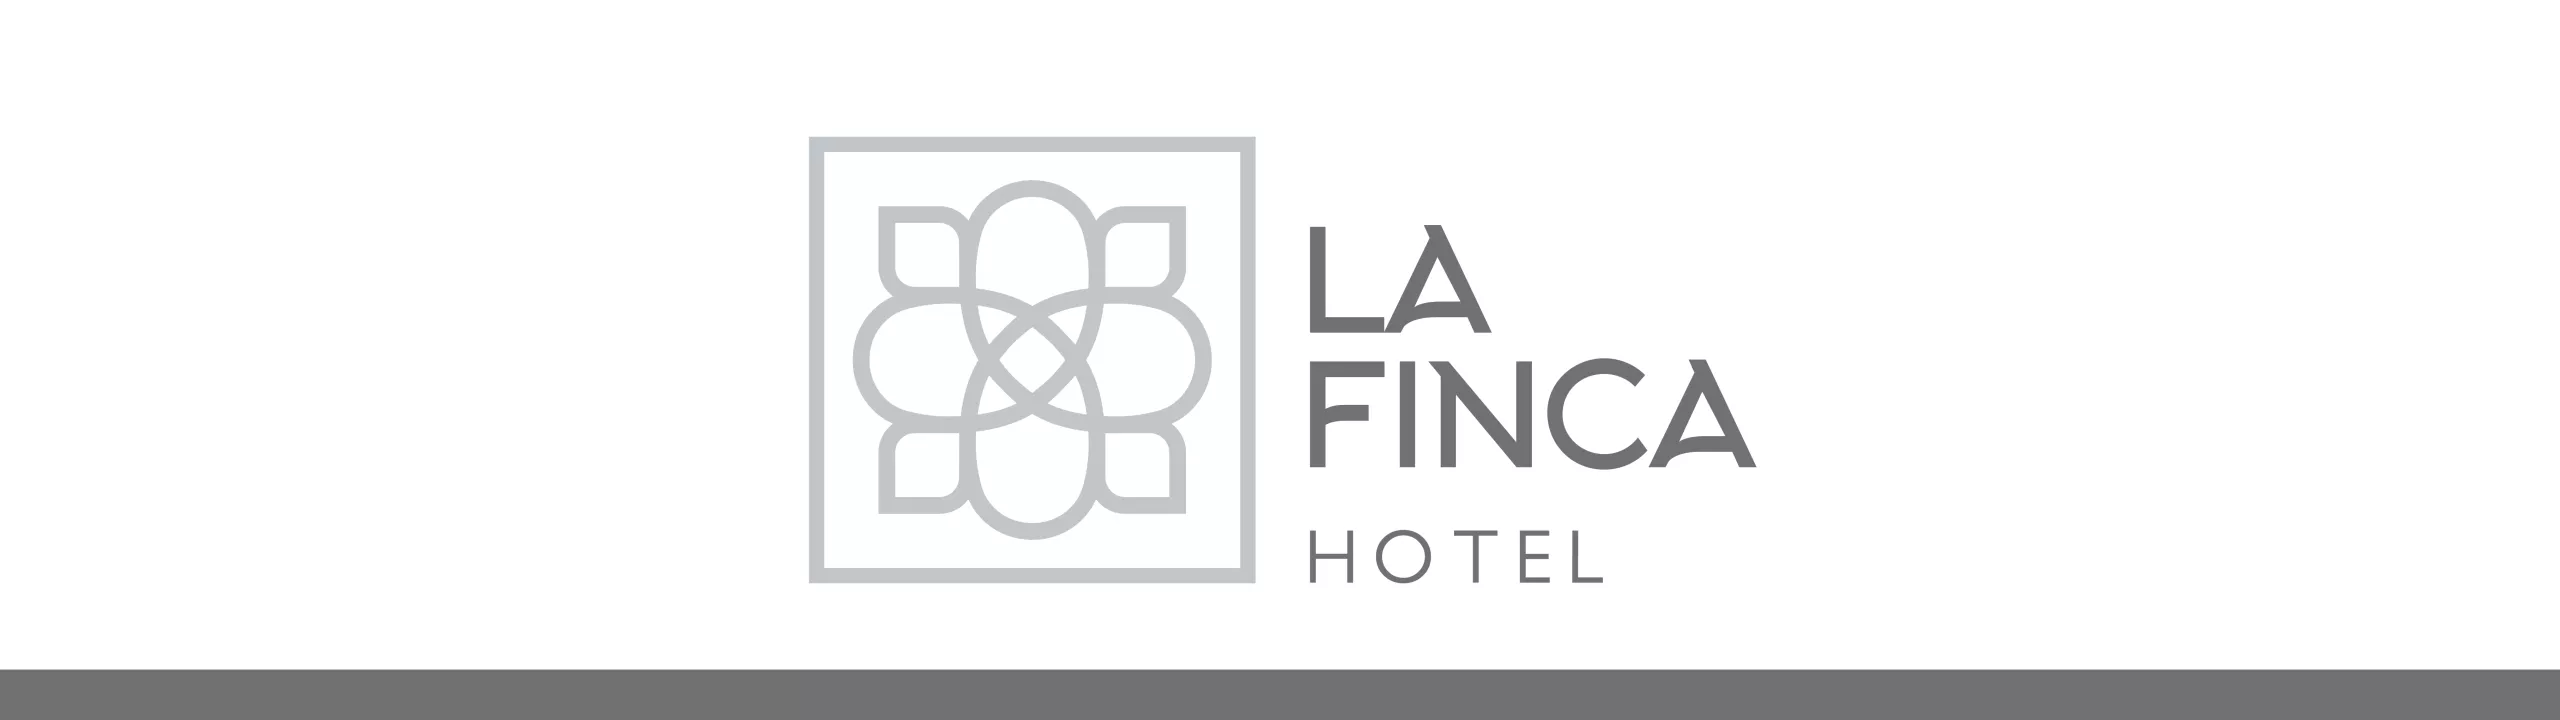 Hotel La Finca Menu